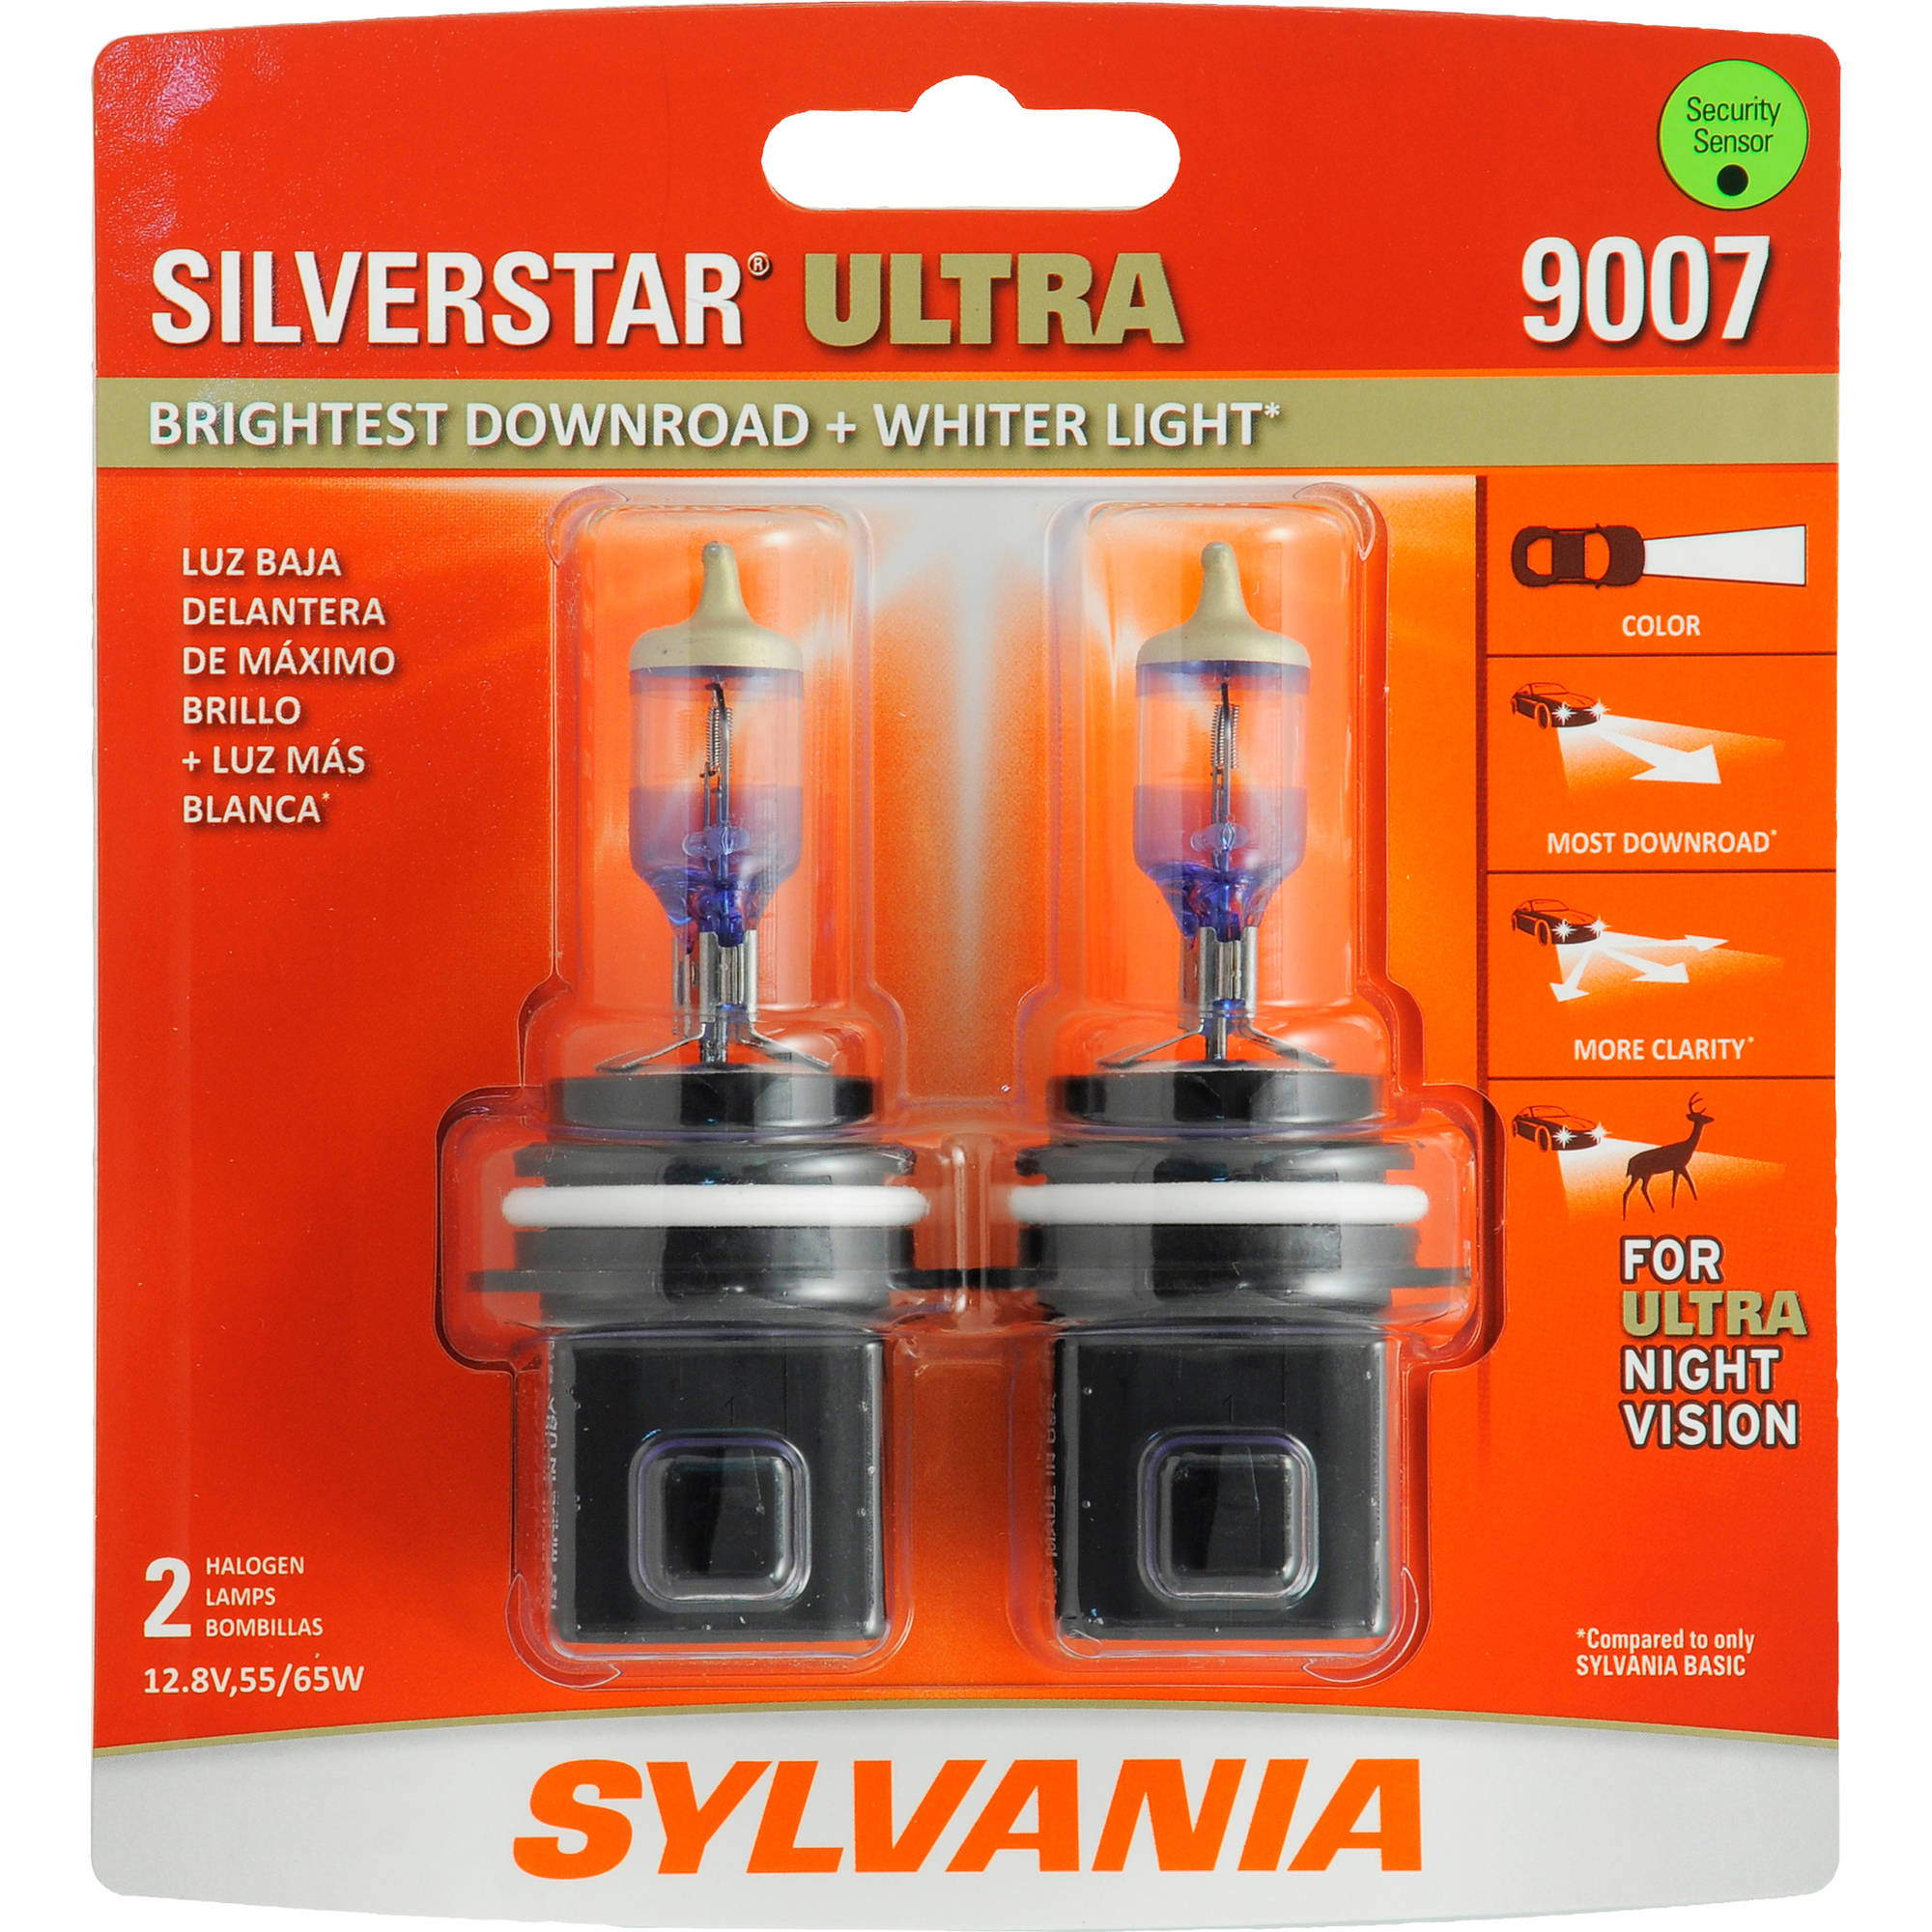 Sylvania 9007 Silverstar Ultra Headlight Twin Pack Walmart within dimensions 2000 X 2000